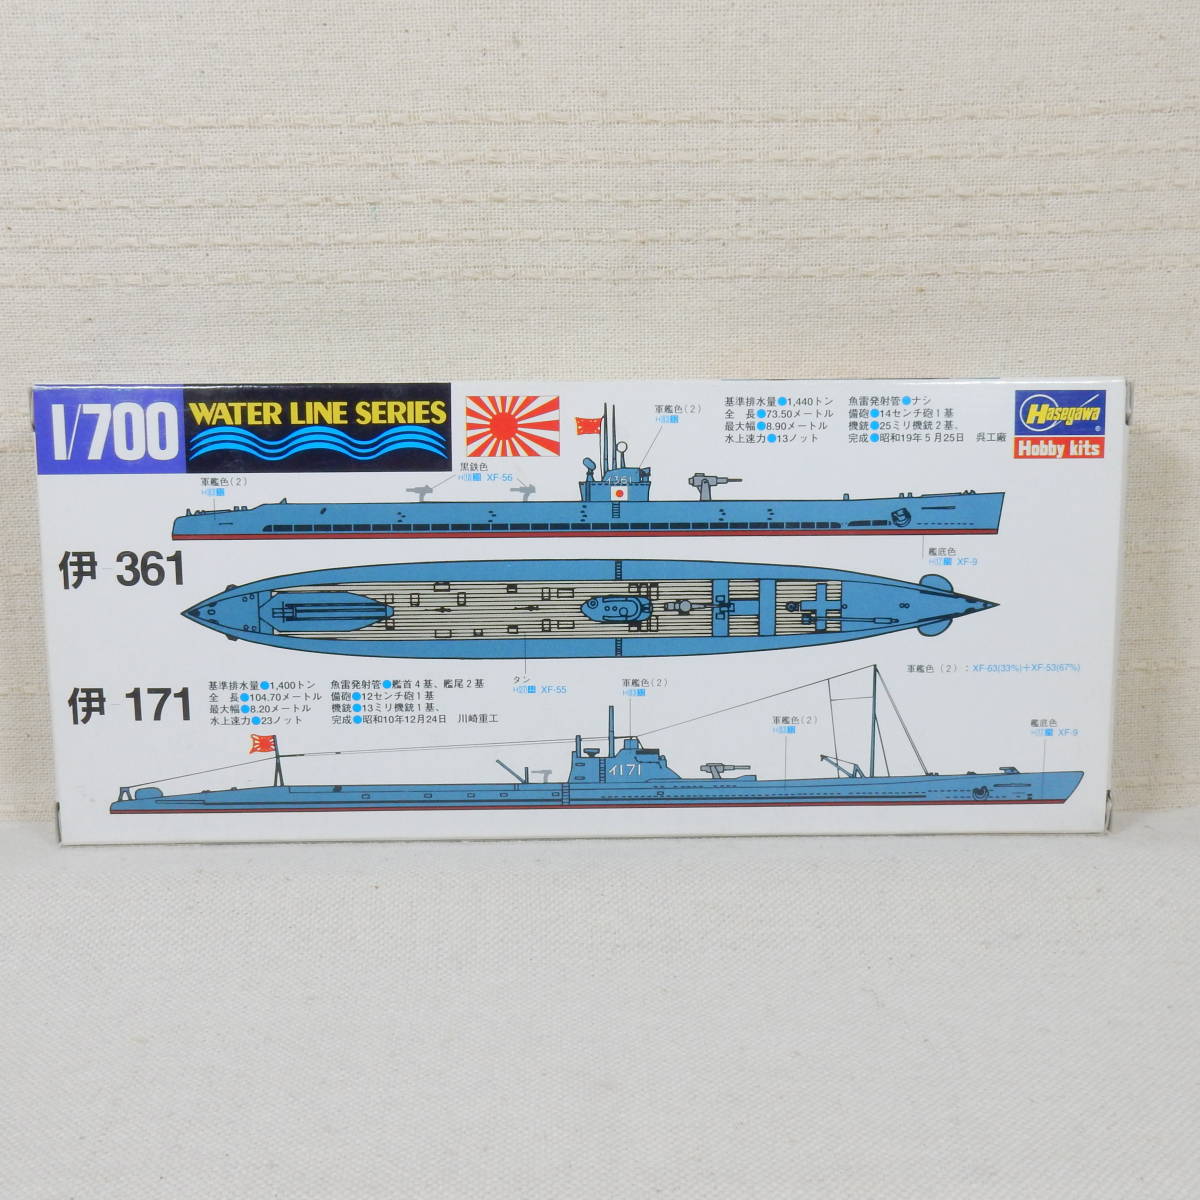 (17C108) 日本潜水艦 伊-361 & 伊-171 ハセガワ 1/700 ウォーターラインシリーズ NO.433 内袋未開封 未組立て_画像5